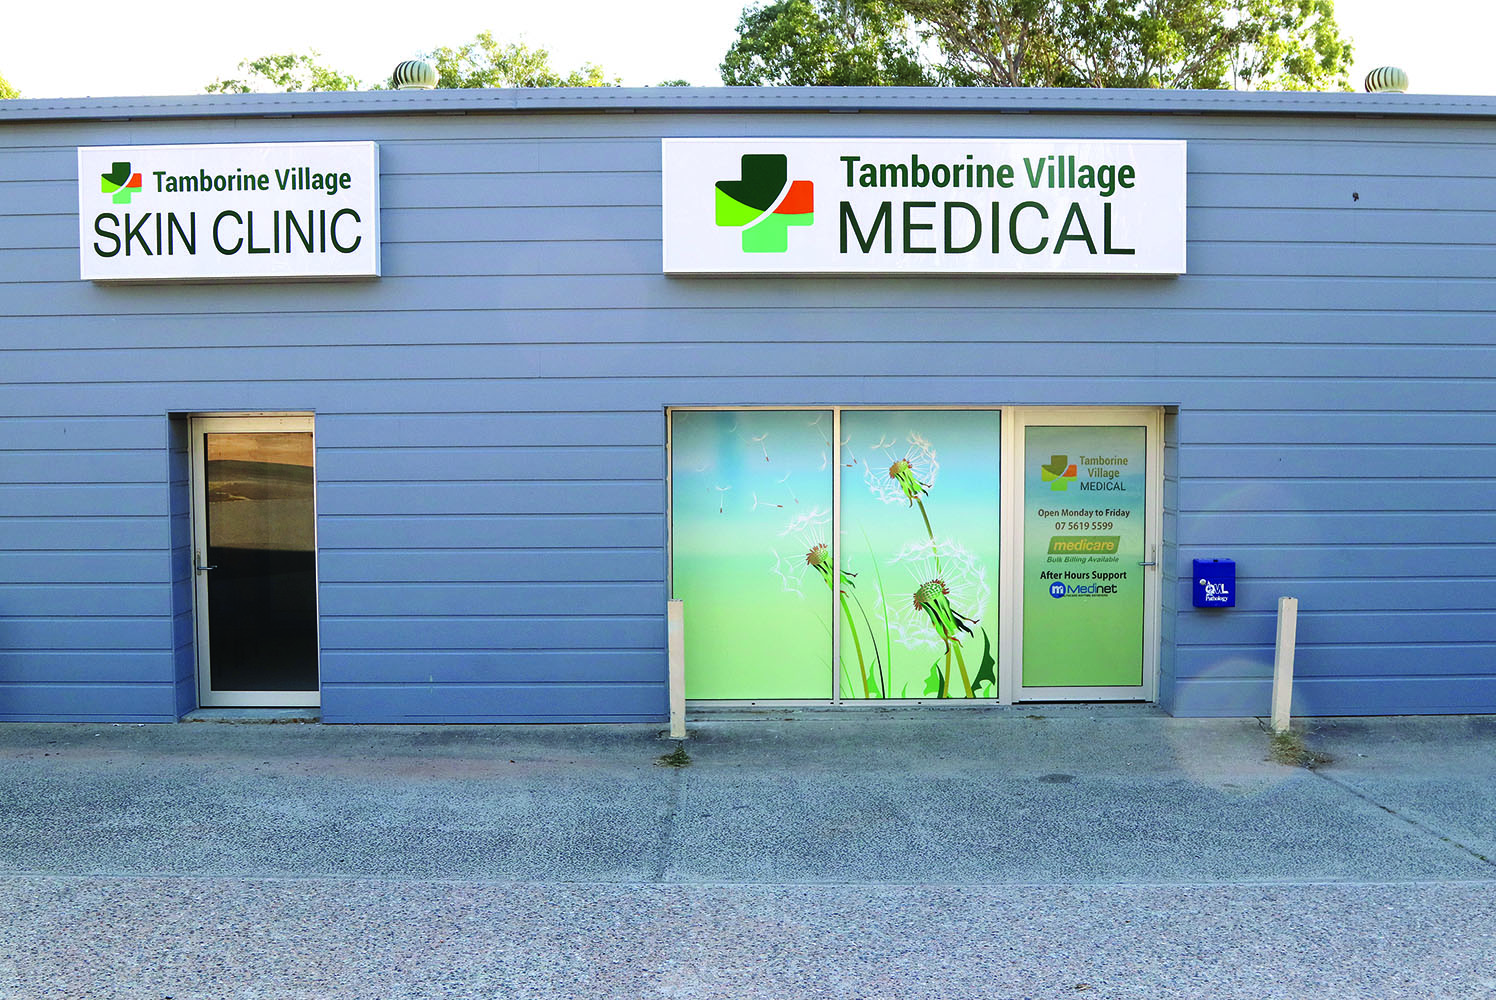 Tamborine Village Medical & Skin Clinic’s new signage & window design